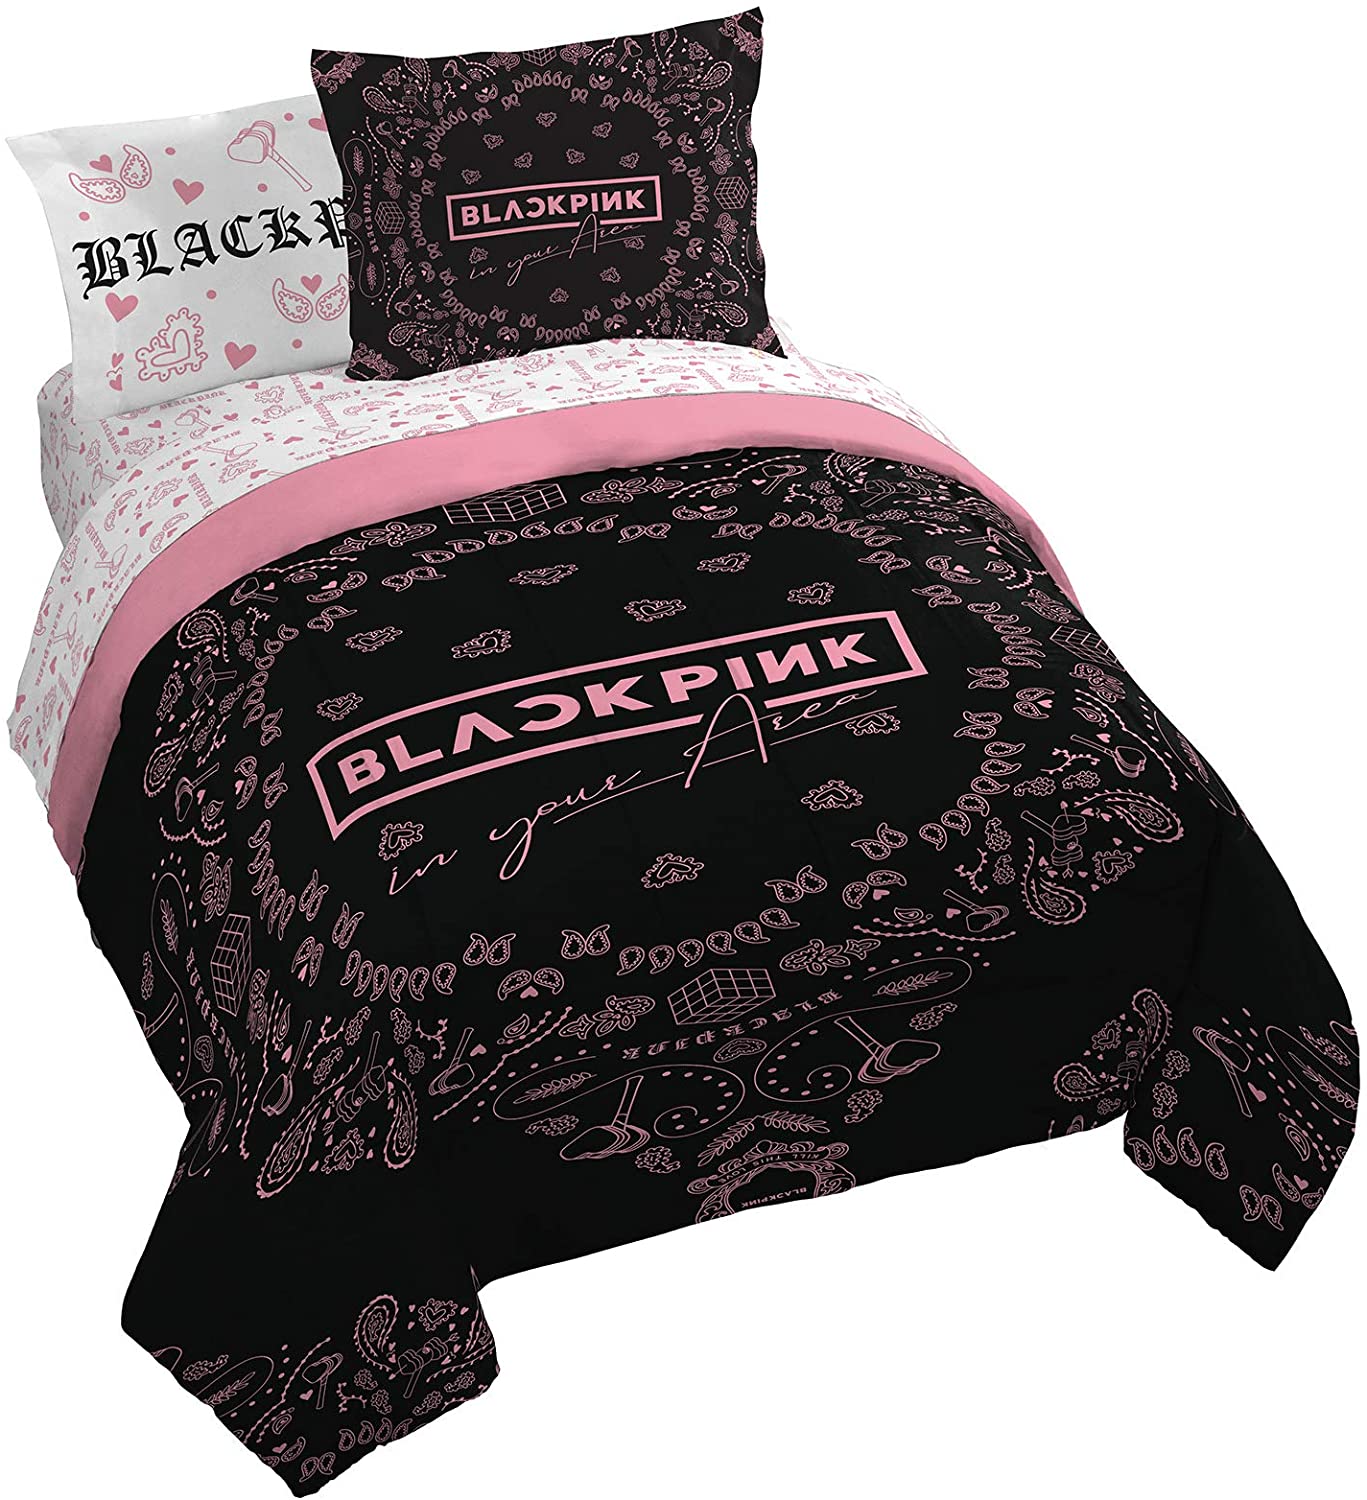 THE BEST] Louis Vuitton Black Pink Luxury Brand Bedding Sets POD